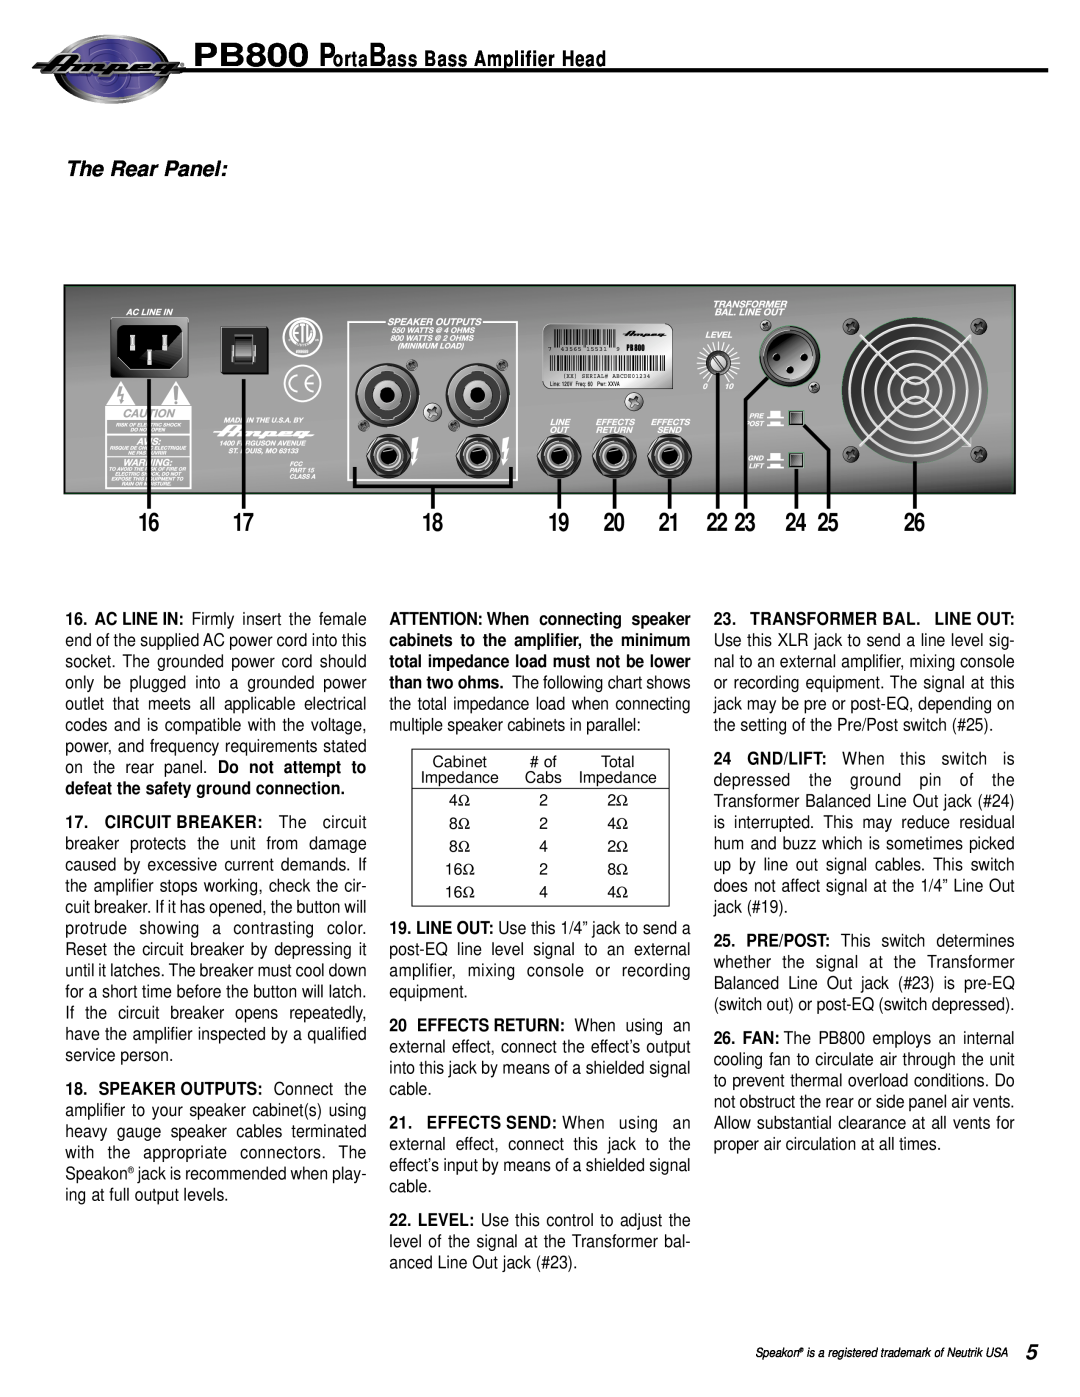 Ampeg PortaBass800 manual The Rear Panel, PB800 PortaBass Bass Amplifier Head, Impedance, Cabs 